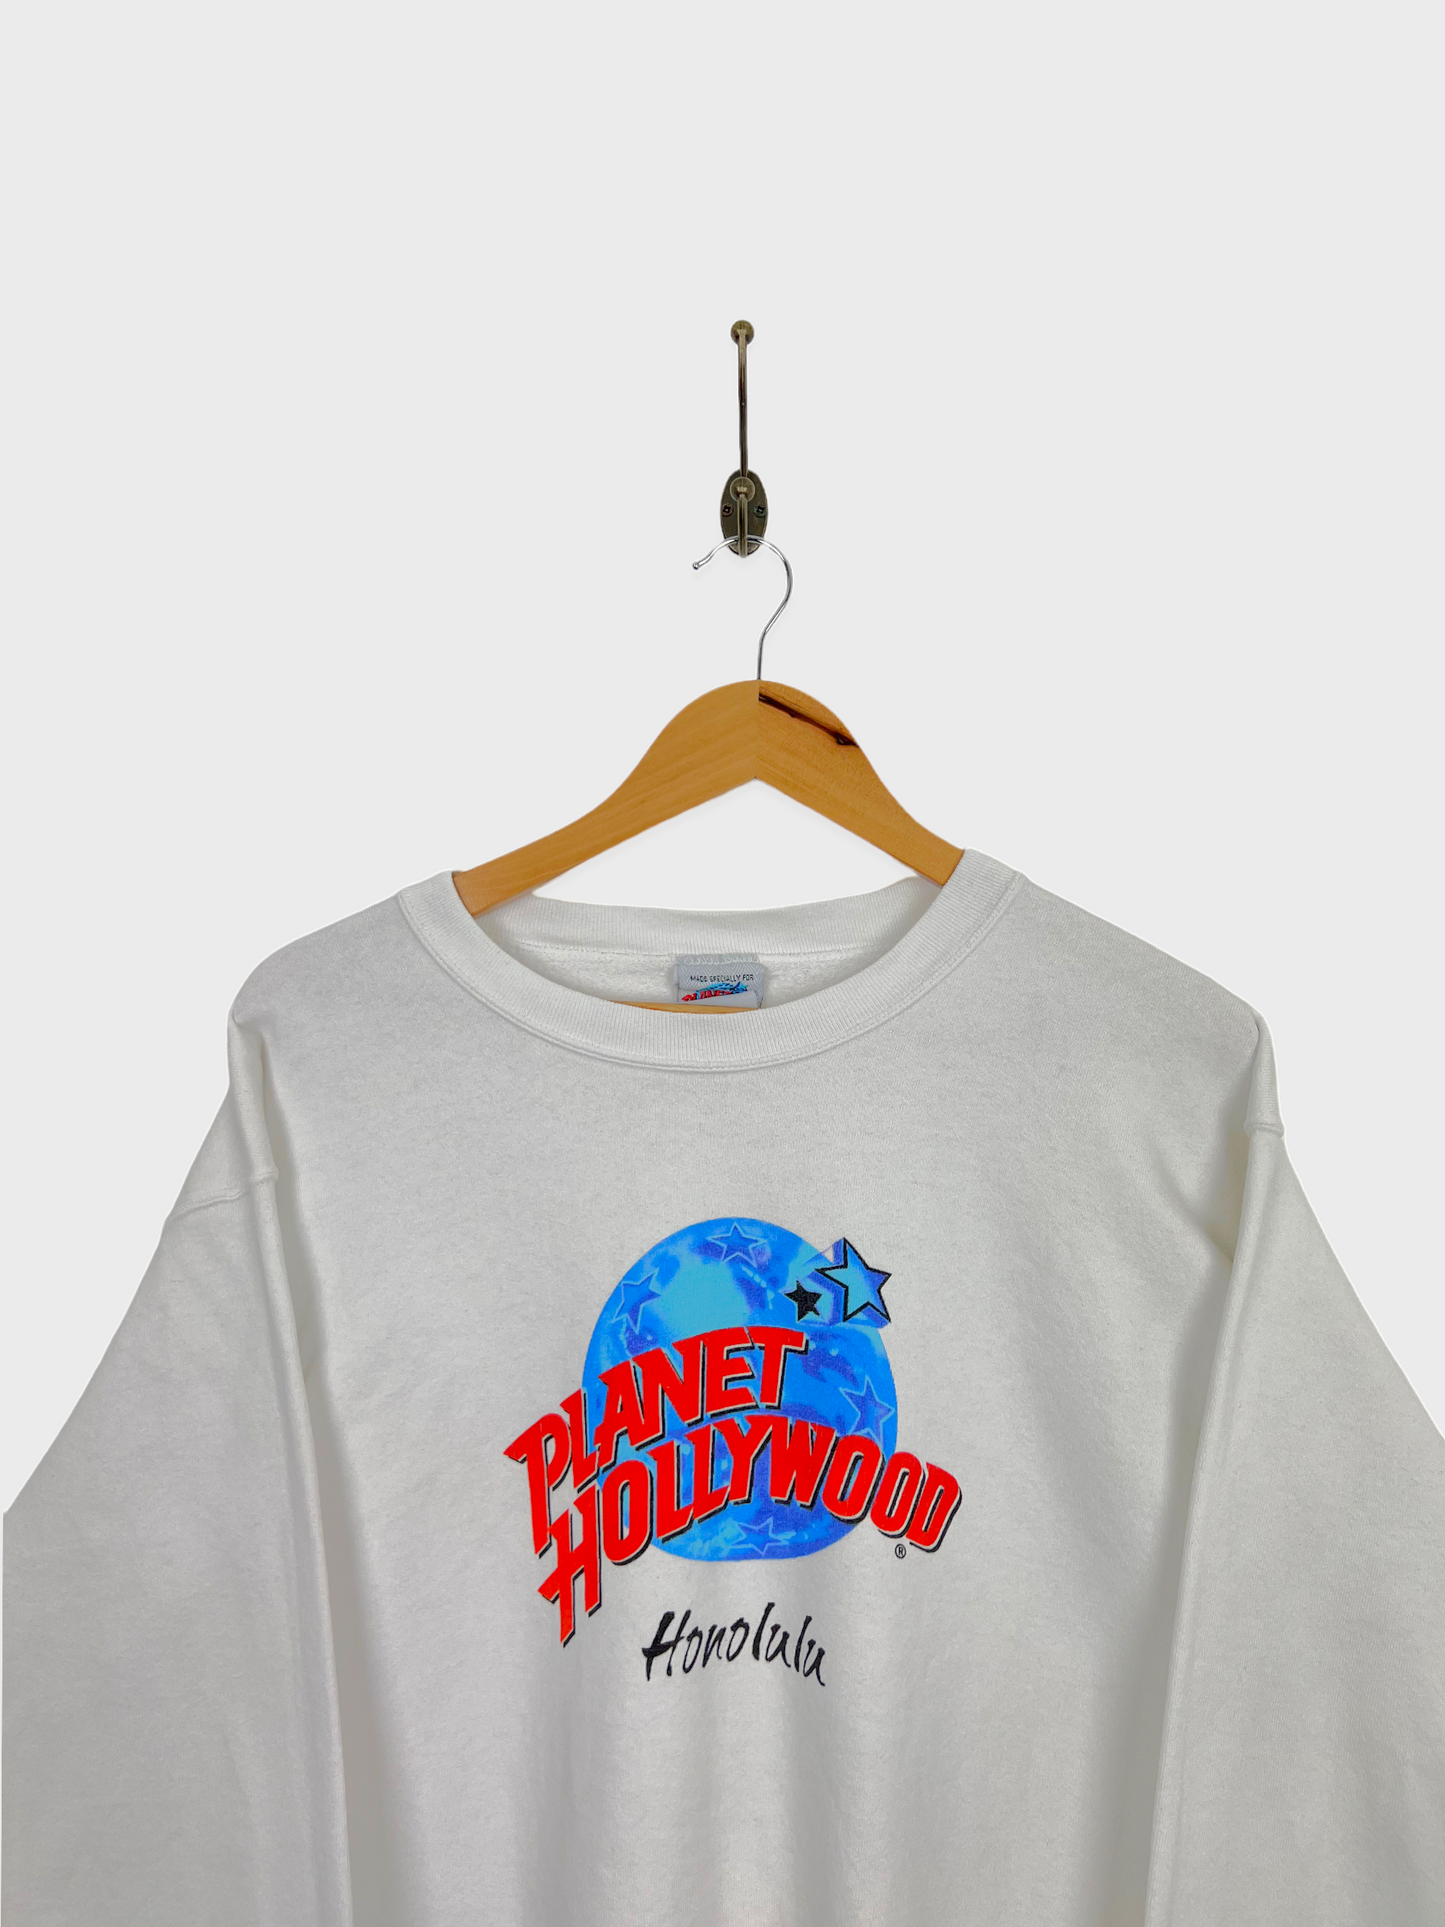 90's Planet Hollywood USA Made Vintage Sweatshirt Size M-L